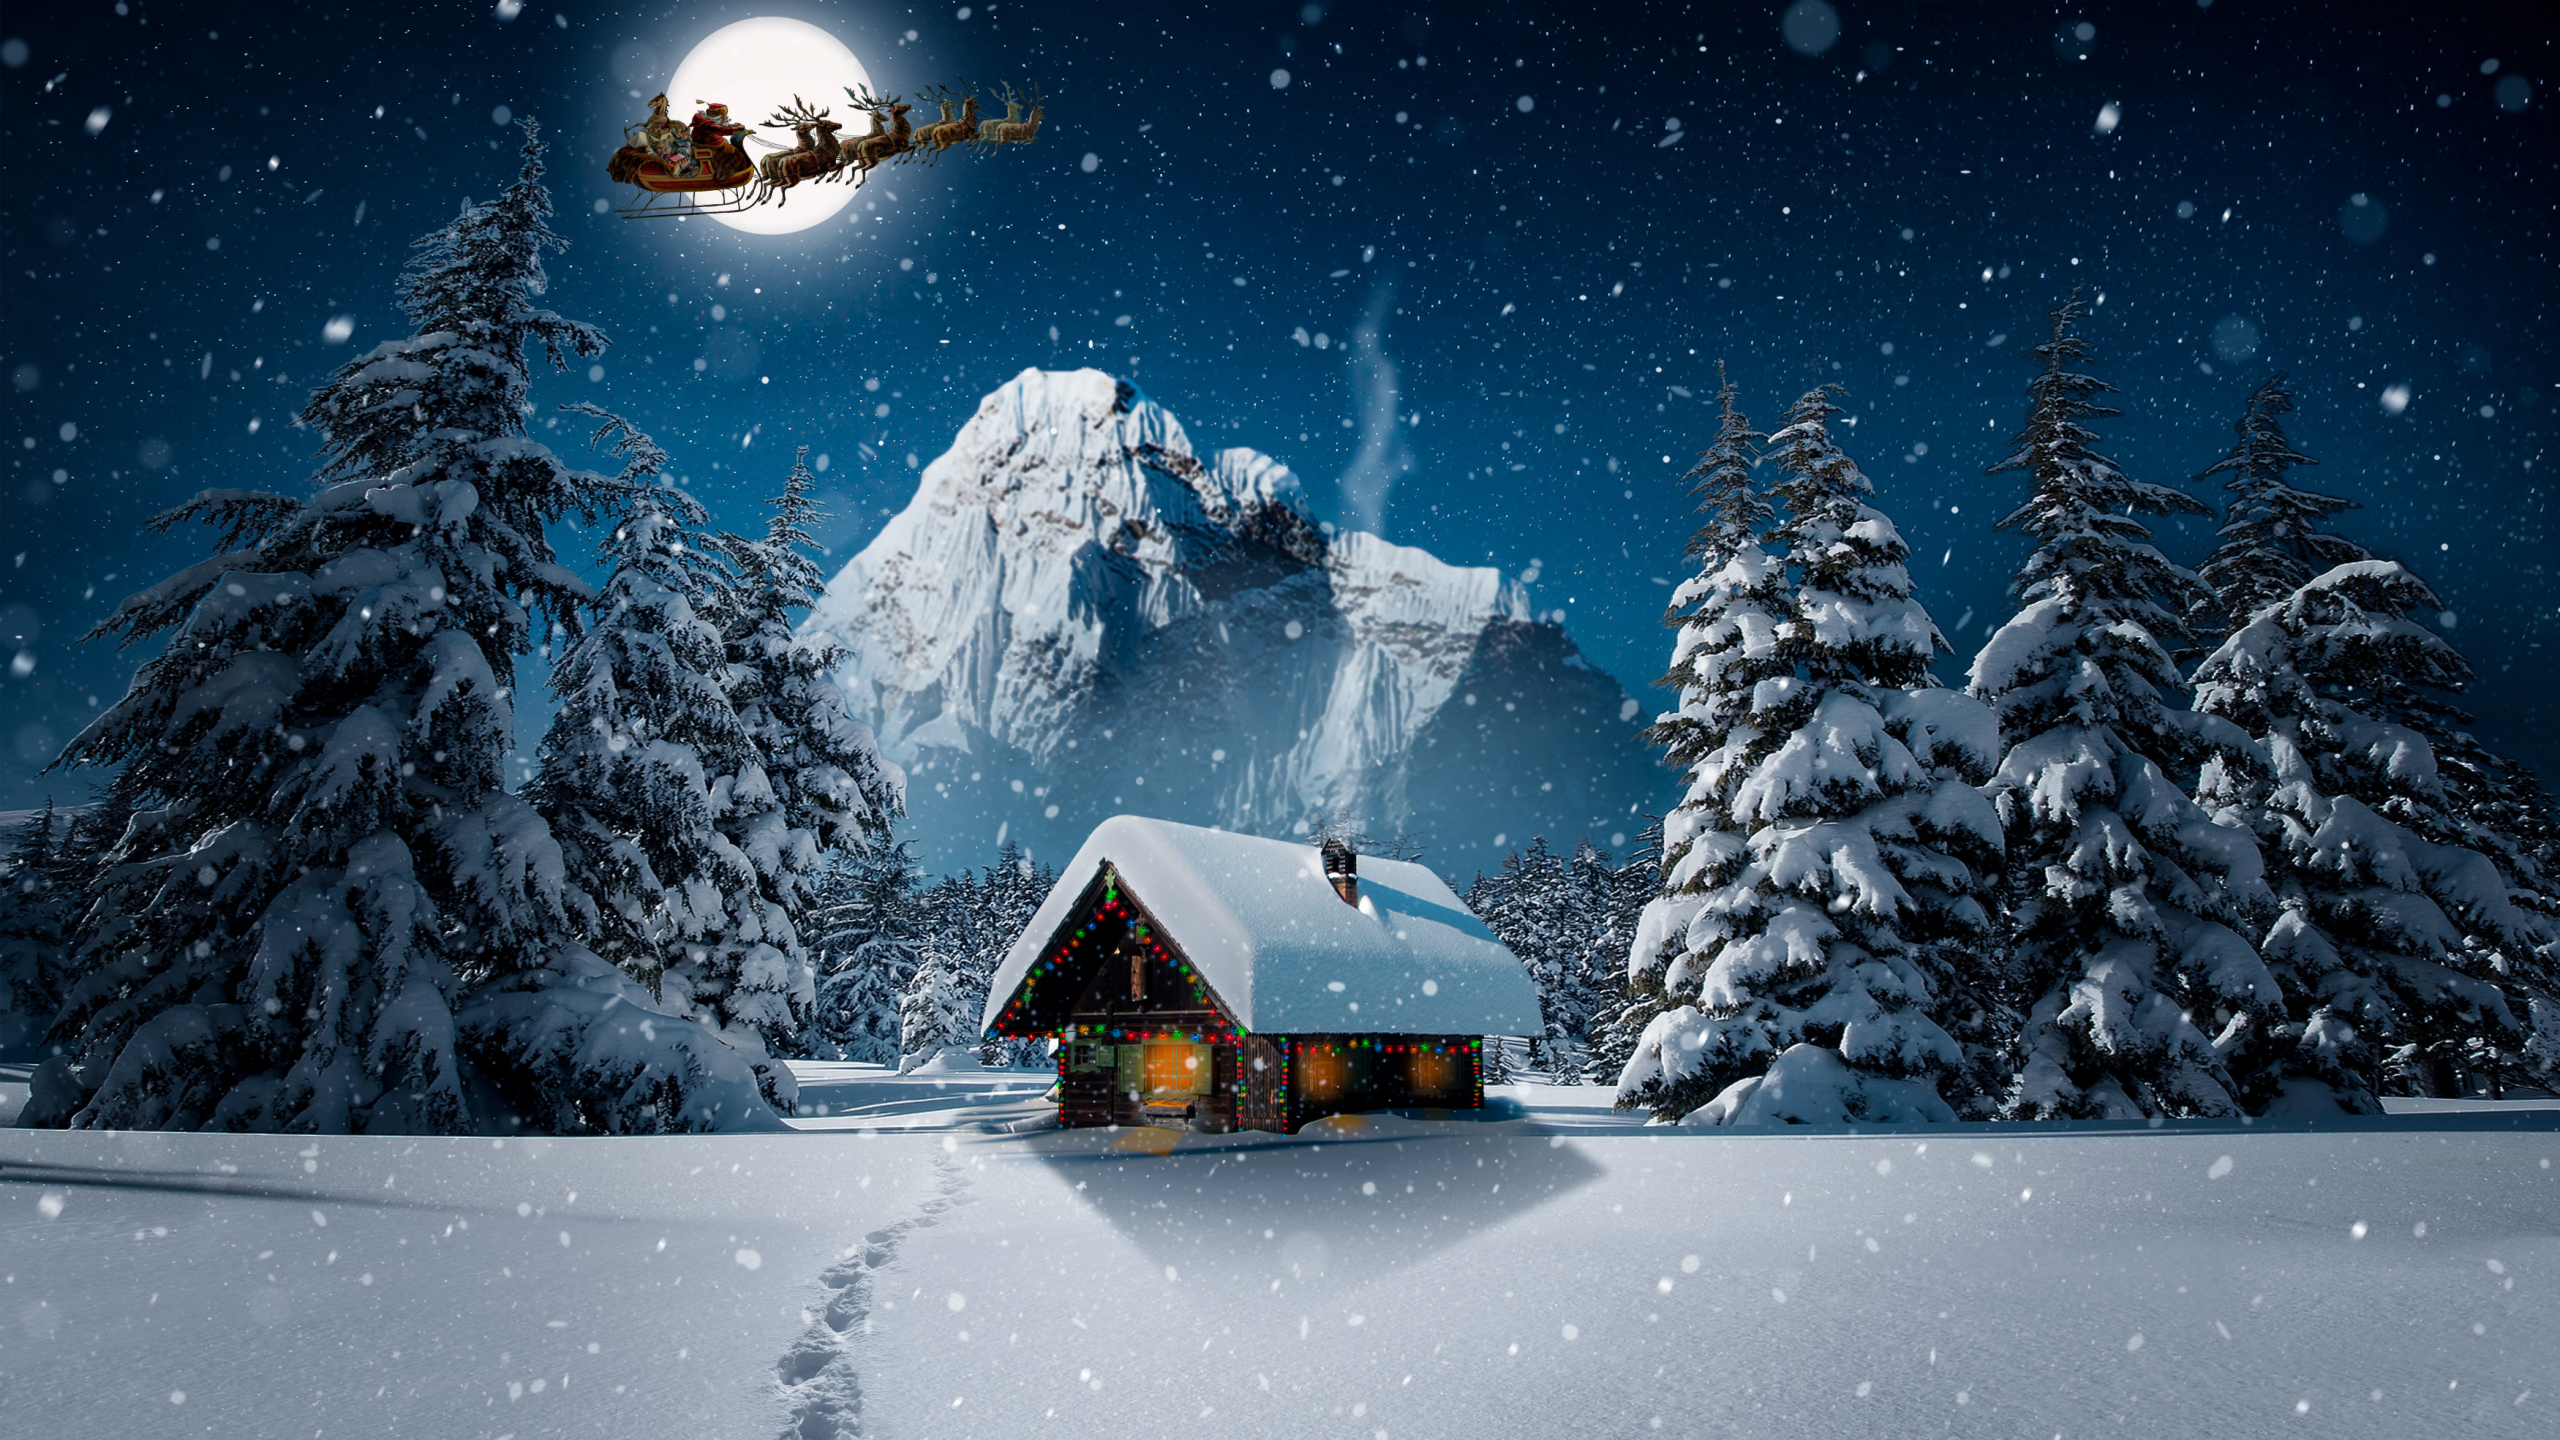 Download 2560x1440 wallpaper snowfall, winter, hut, house, winter, christmas, dual wide, widescreen 16: widescreen, 2560x1440 HD image, background, 17253